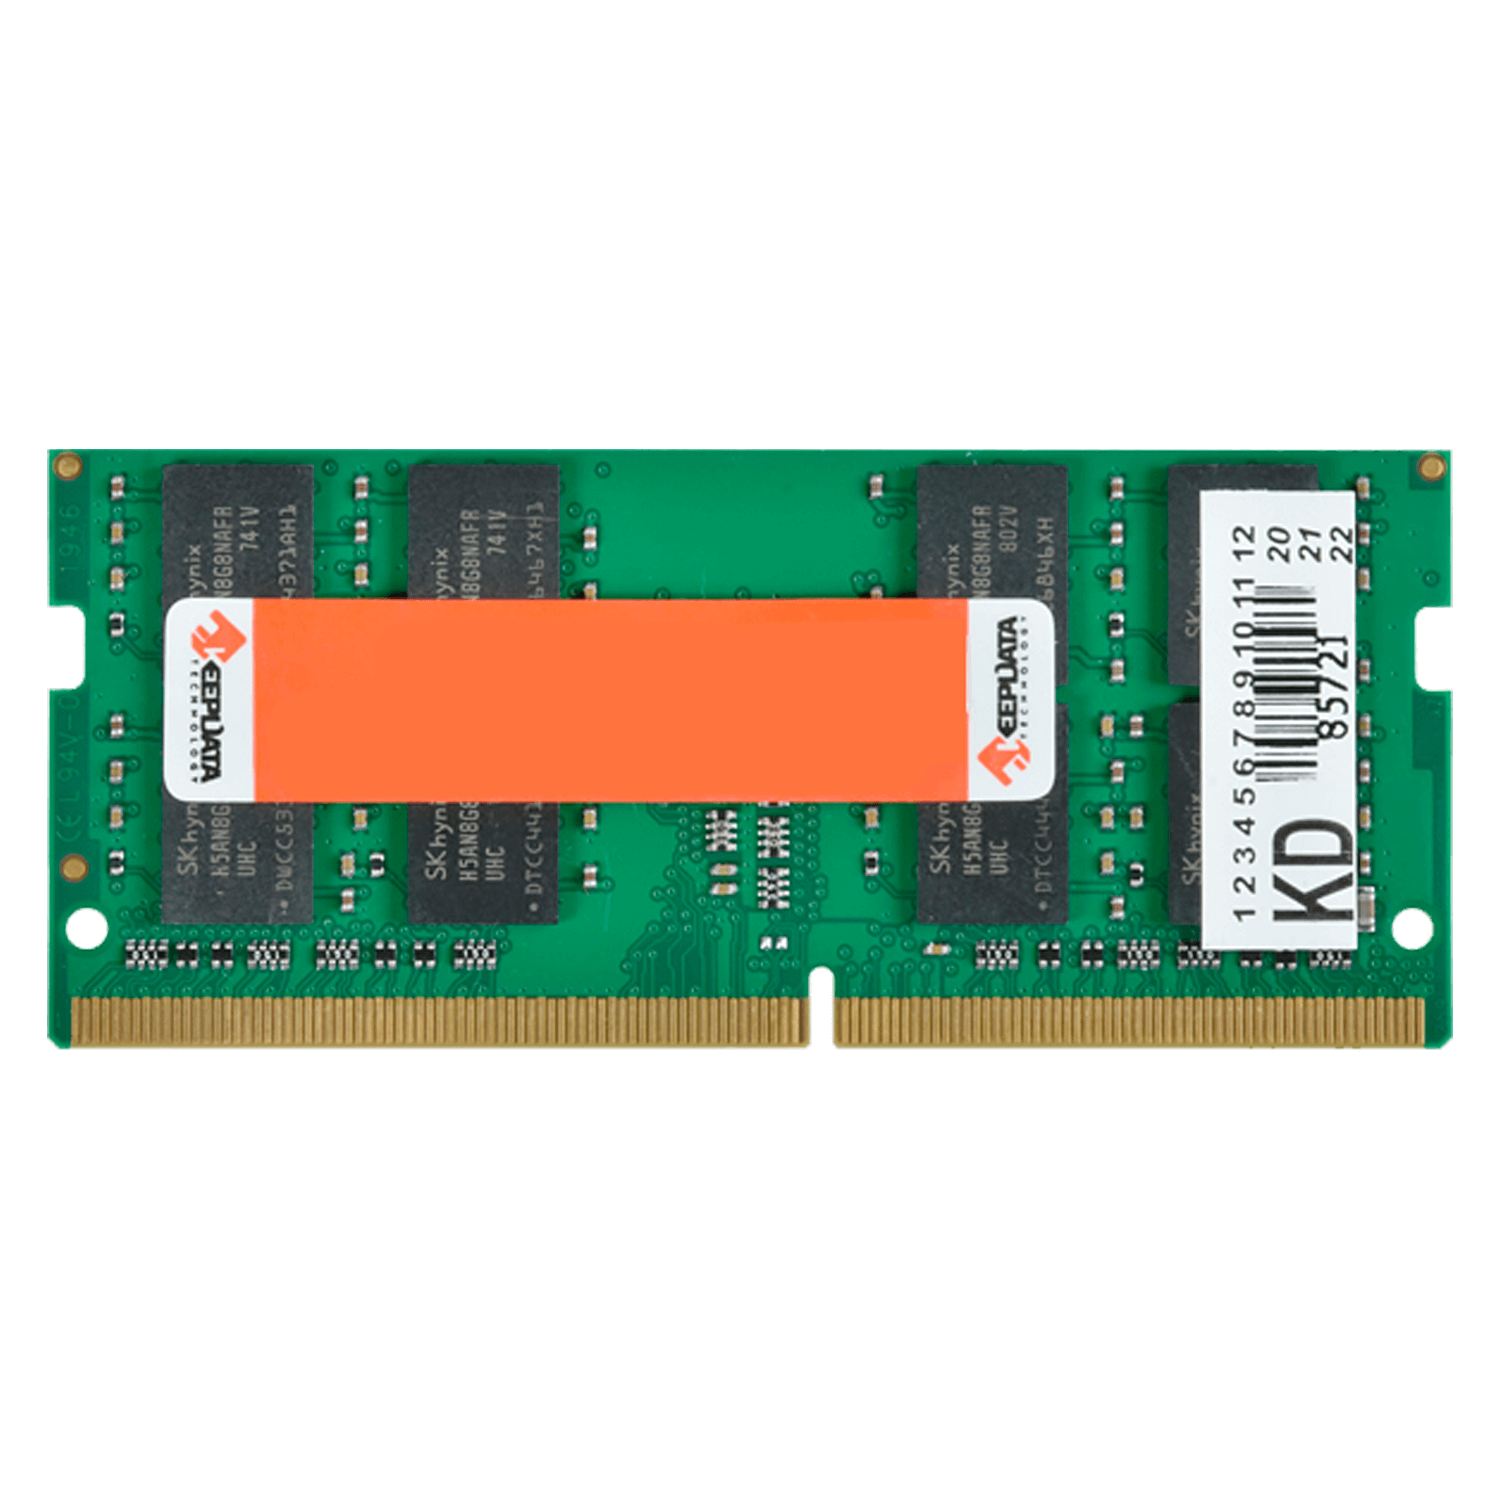 Memória RAM para Notebook 16GB / DDR4 / 1x16GB / 2400MHz - (KD24S17/16G)